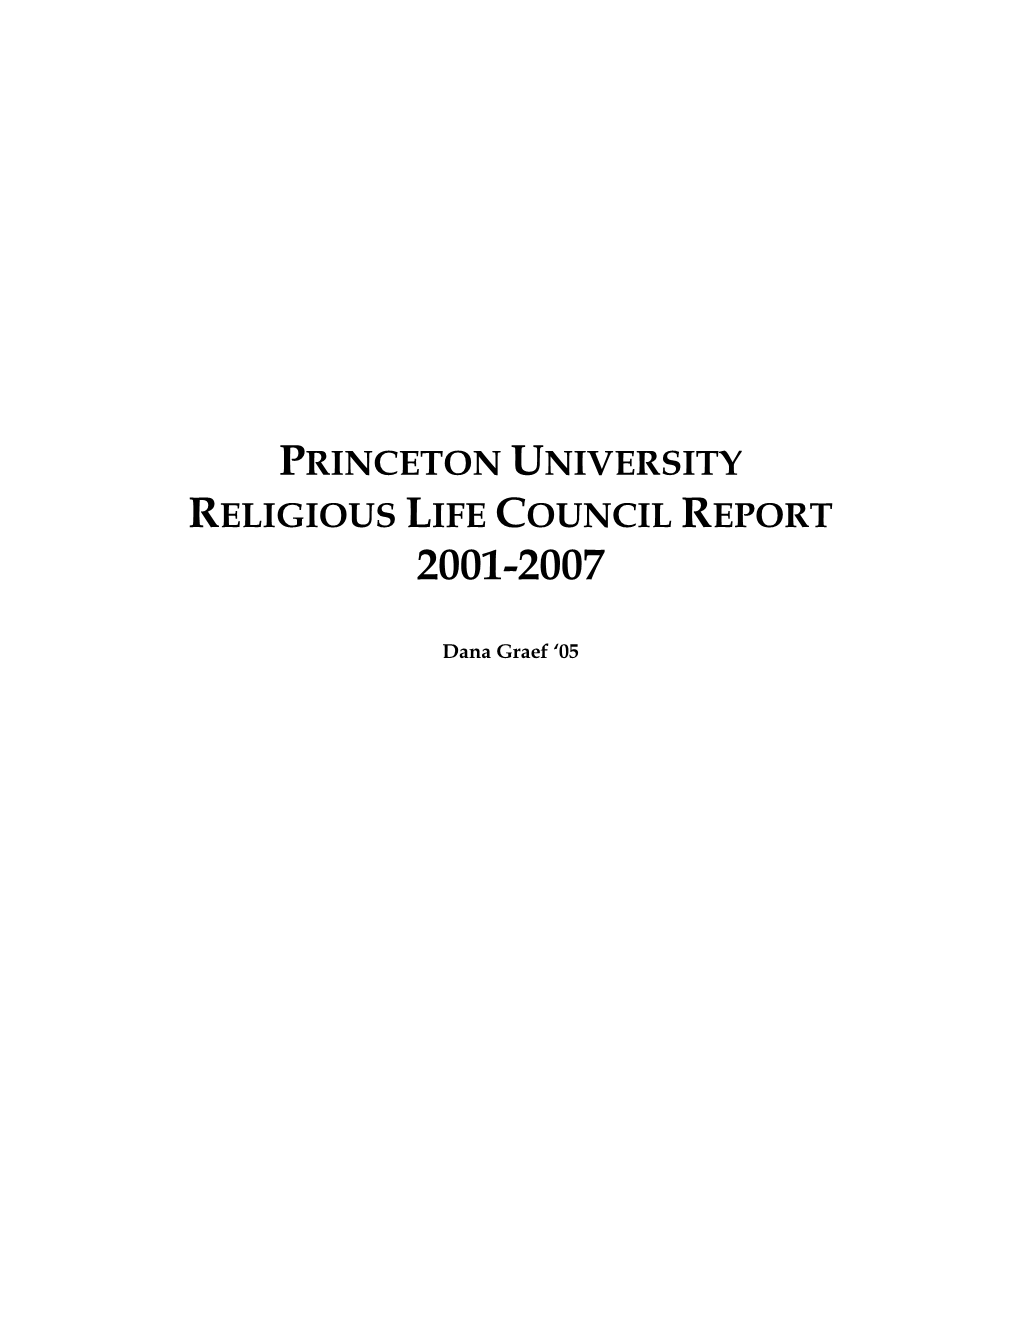 Princeton University Religious Life Council Report 2001-2007